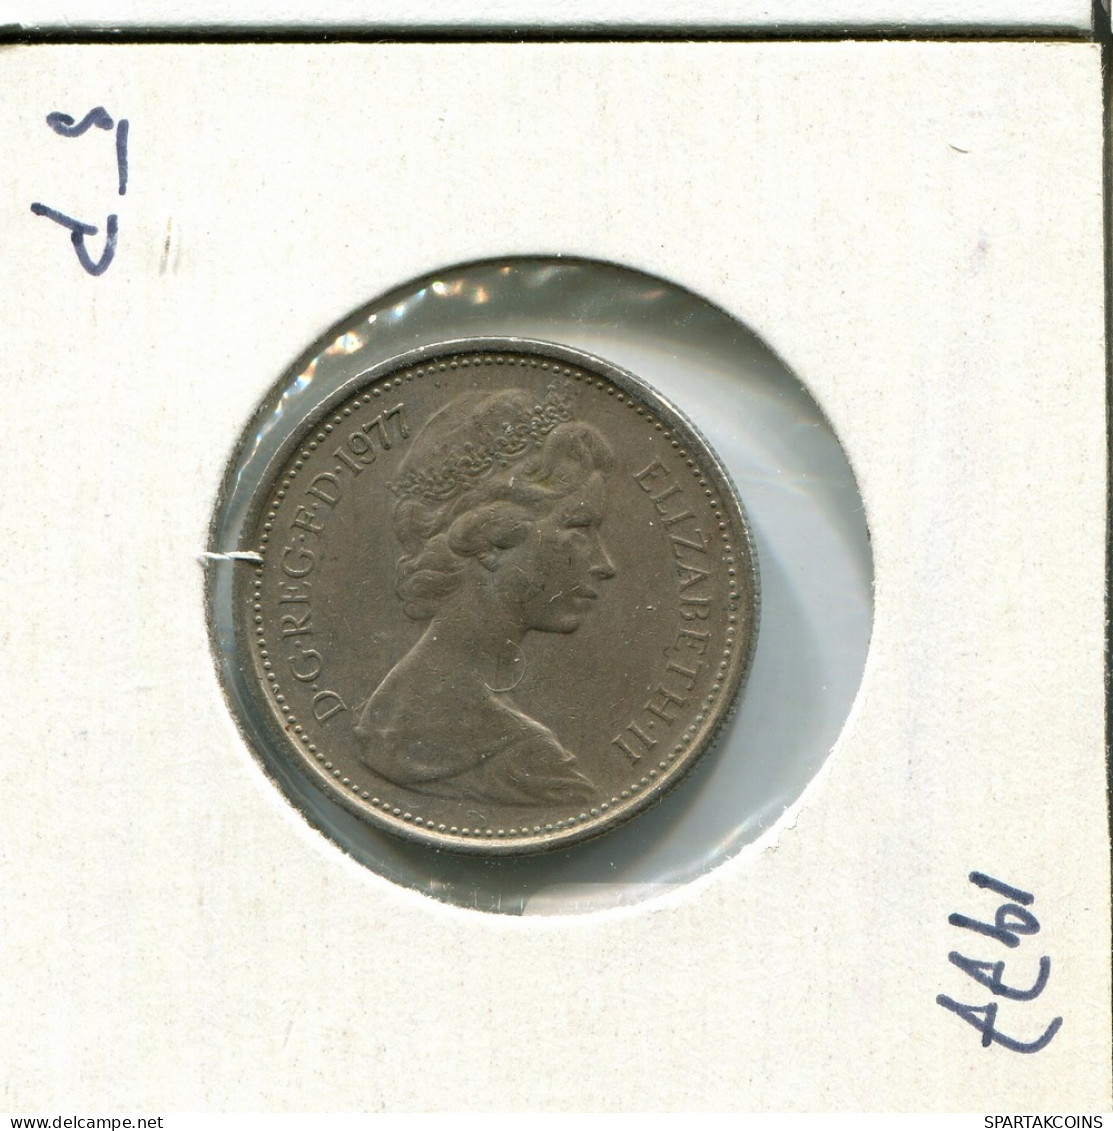 5 NEW PENCE 1977 UK GROßBRITANNIEN GREAT BRITAIN Münze #AU826.D - 5 Pence & 5 New Pence